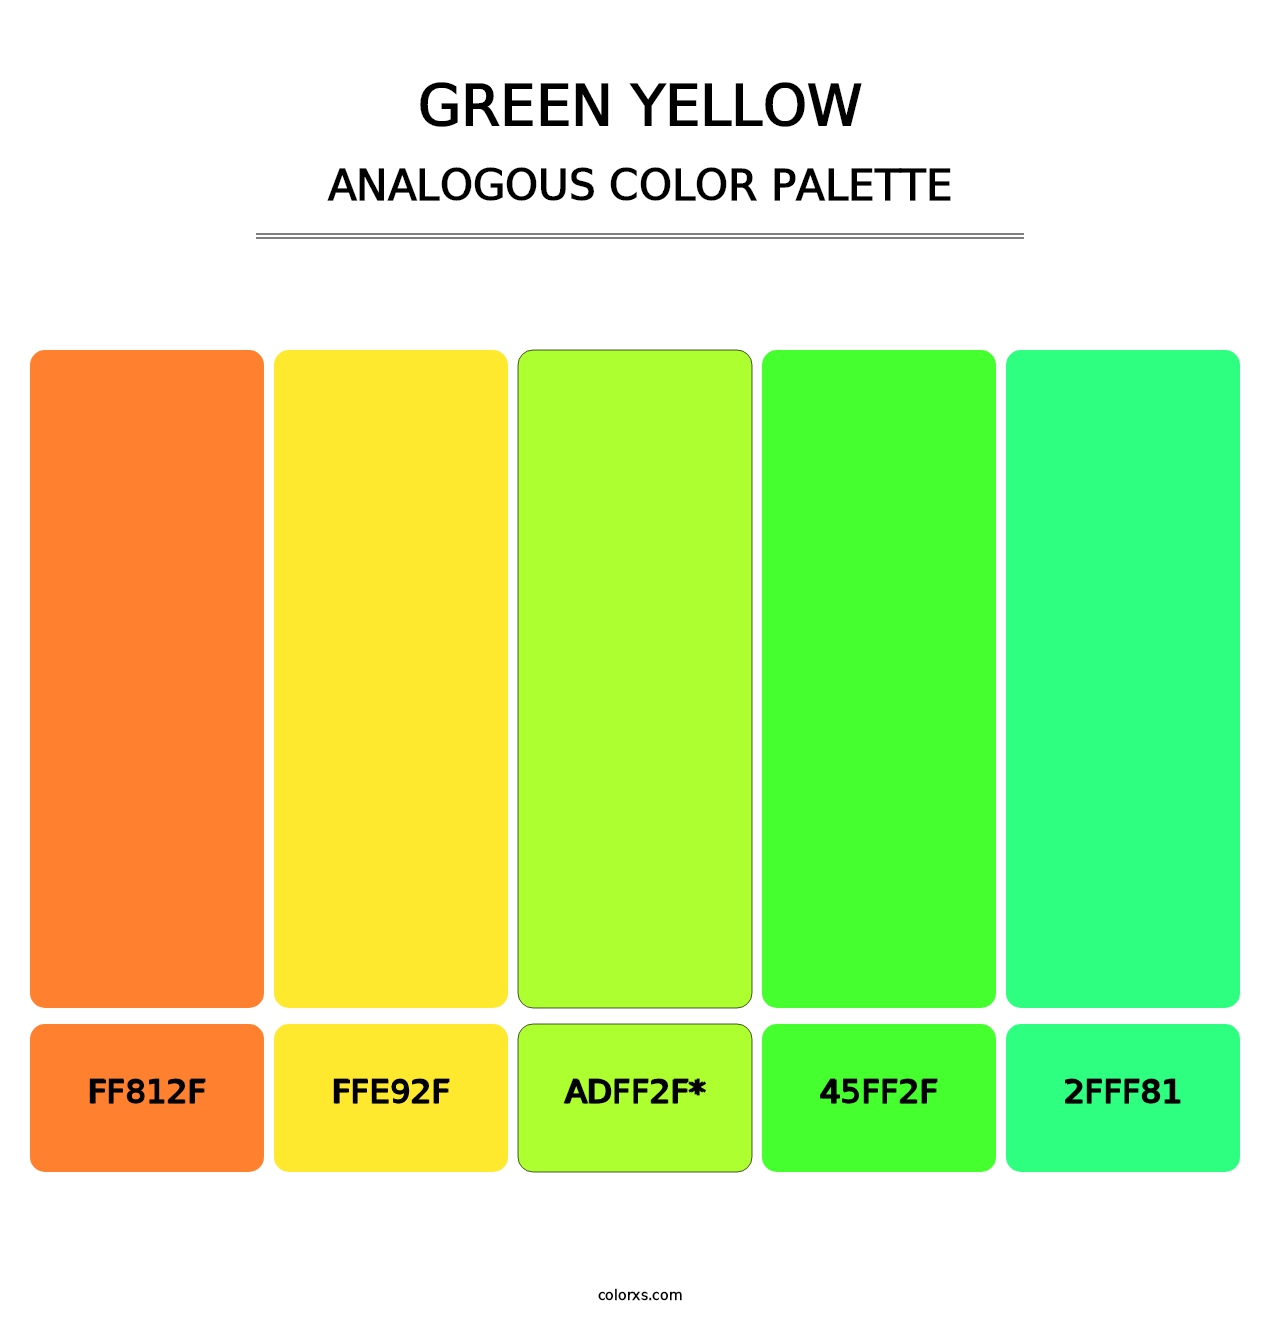 Green Yellow - Analogous Color Palette